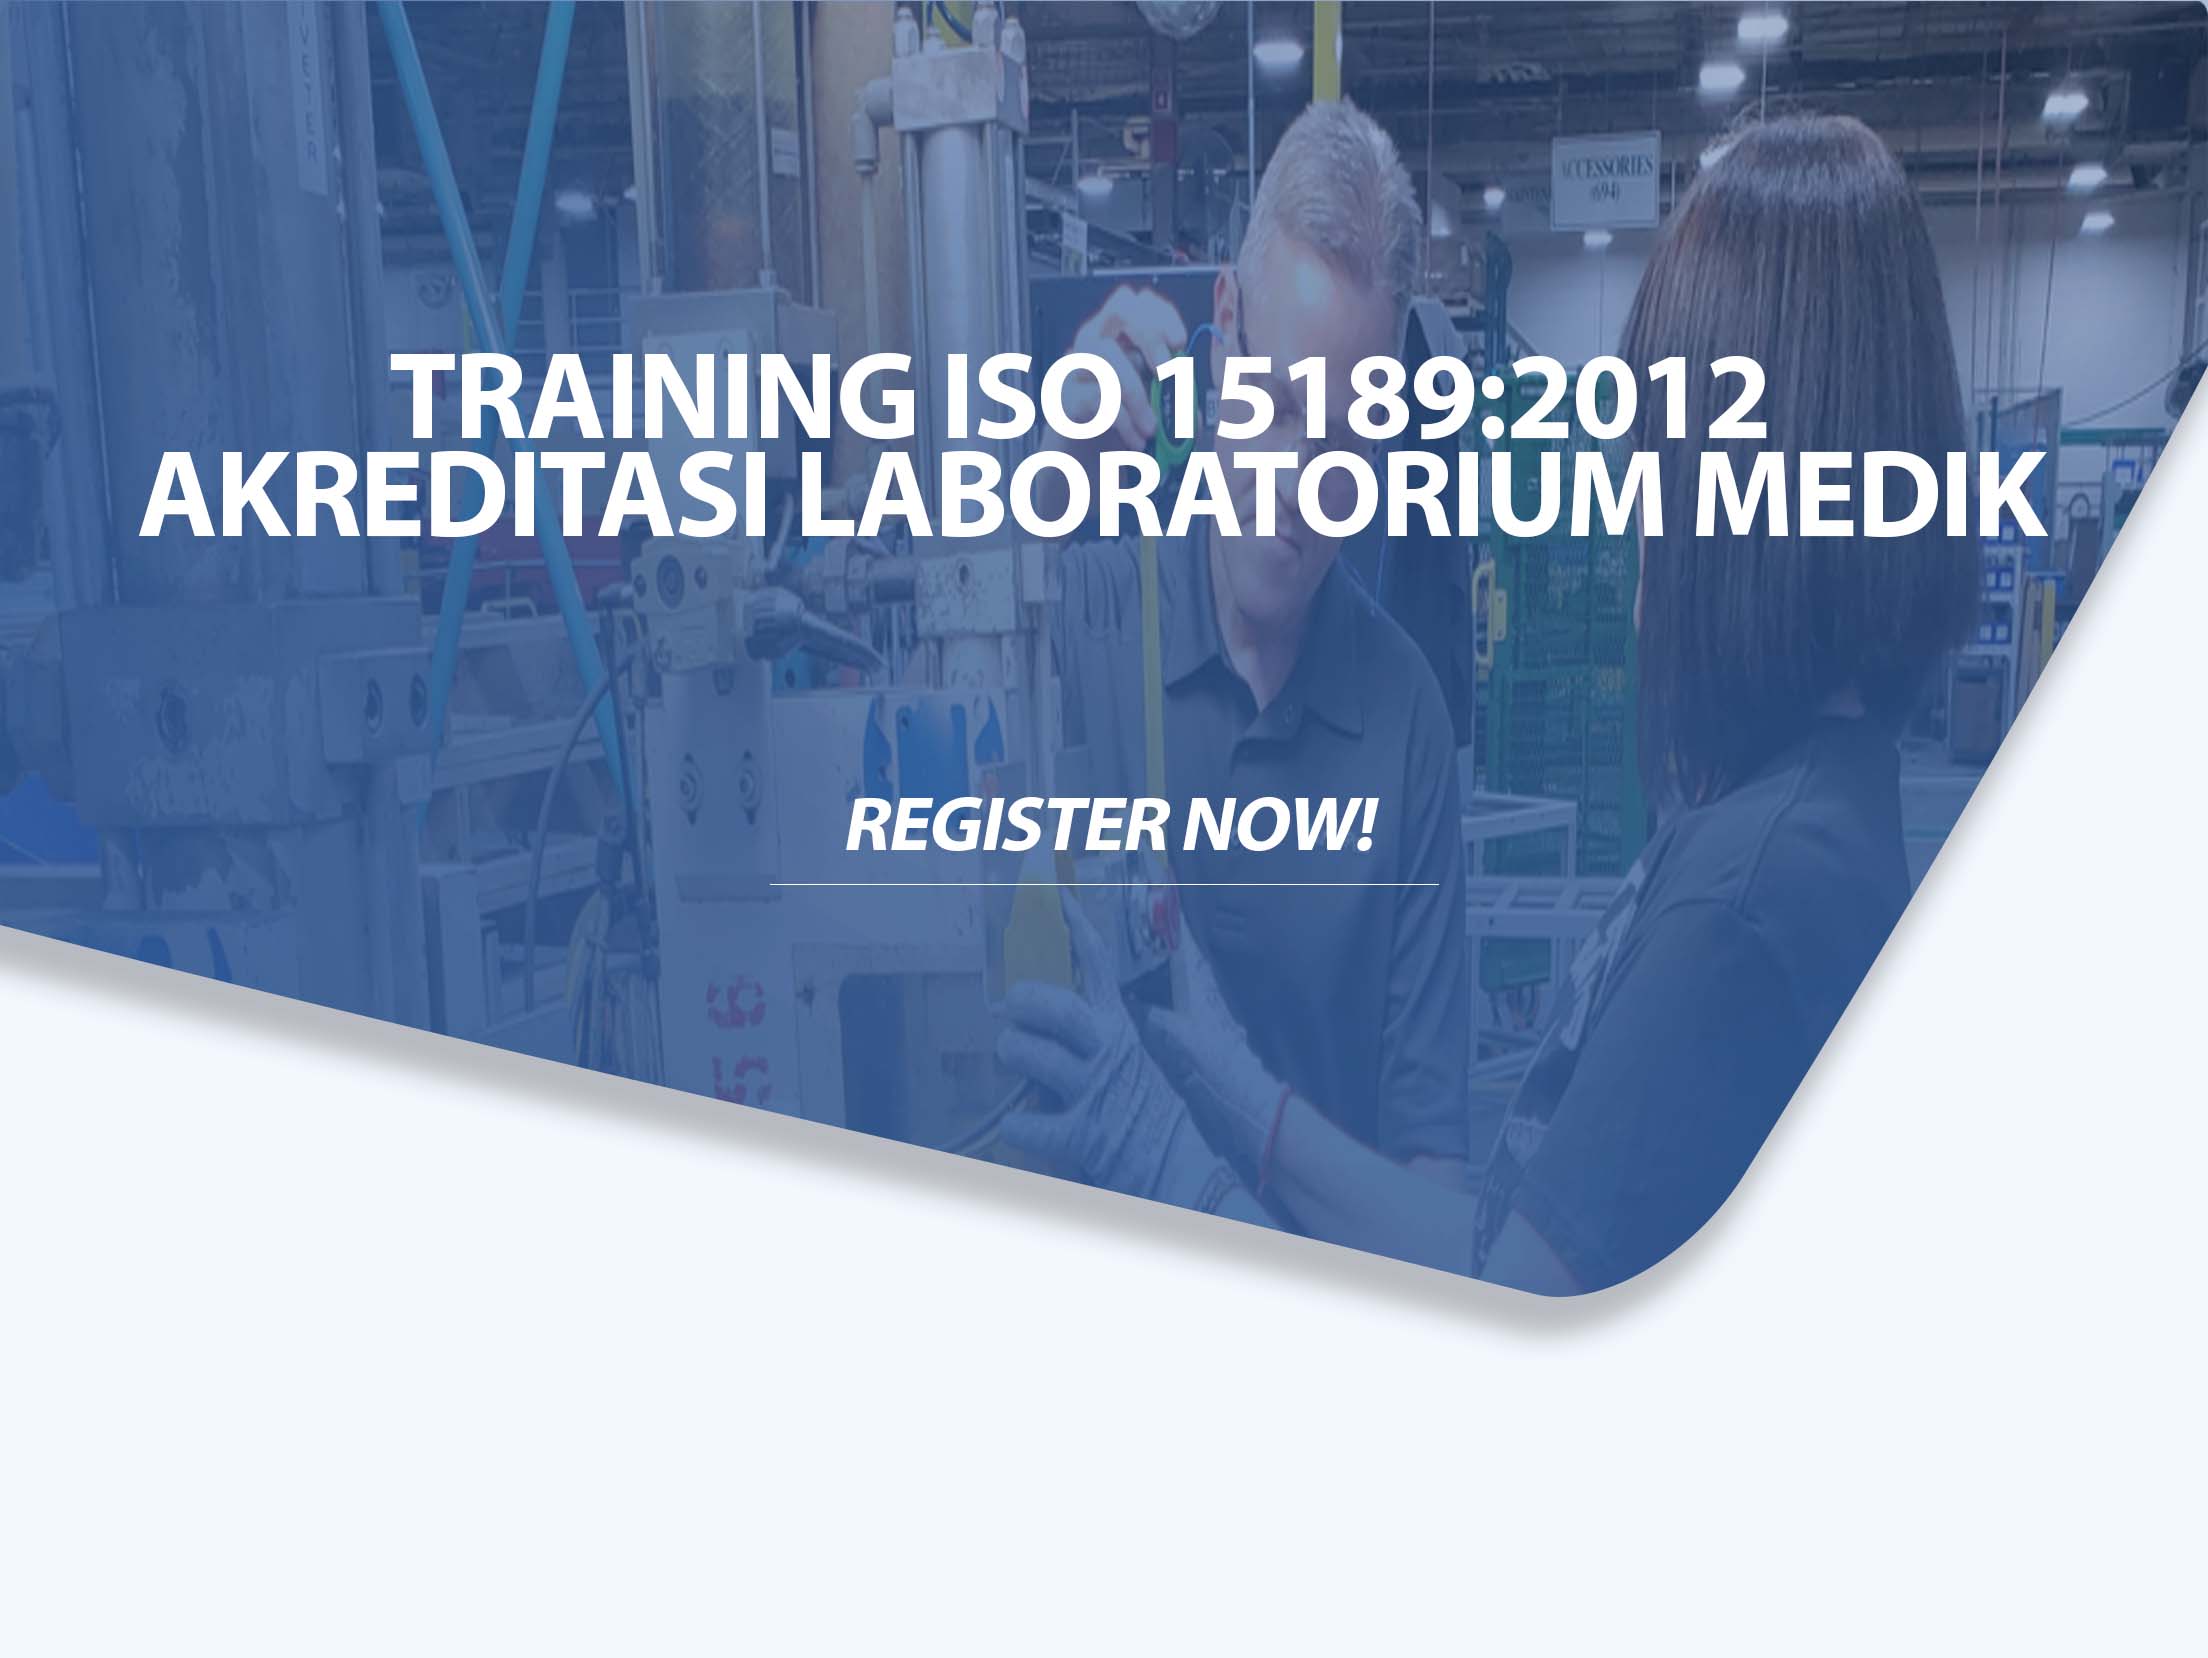 Training ISO 15189 2012 Akreditasi Laboratorium Medik